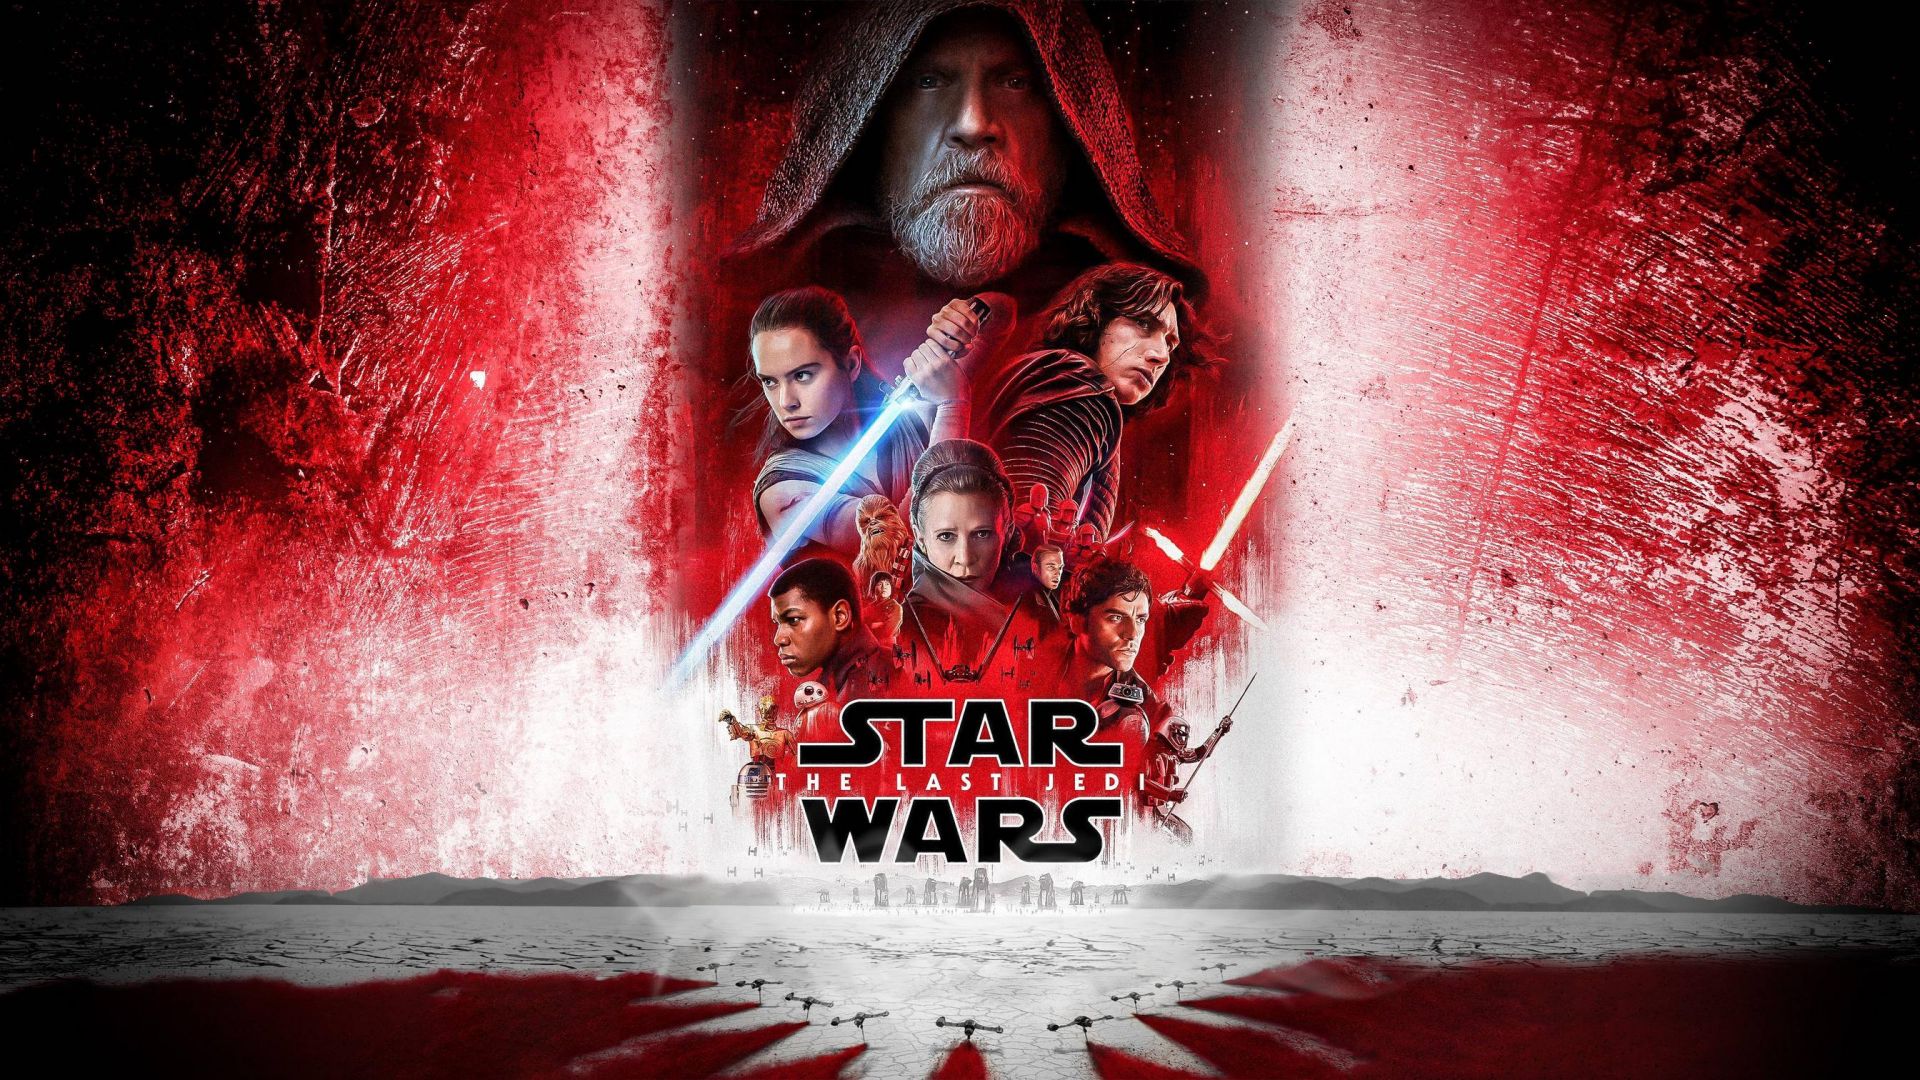 Wallpaper Star Wars: The Last Jedi, 2017 movie, poster, red